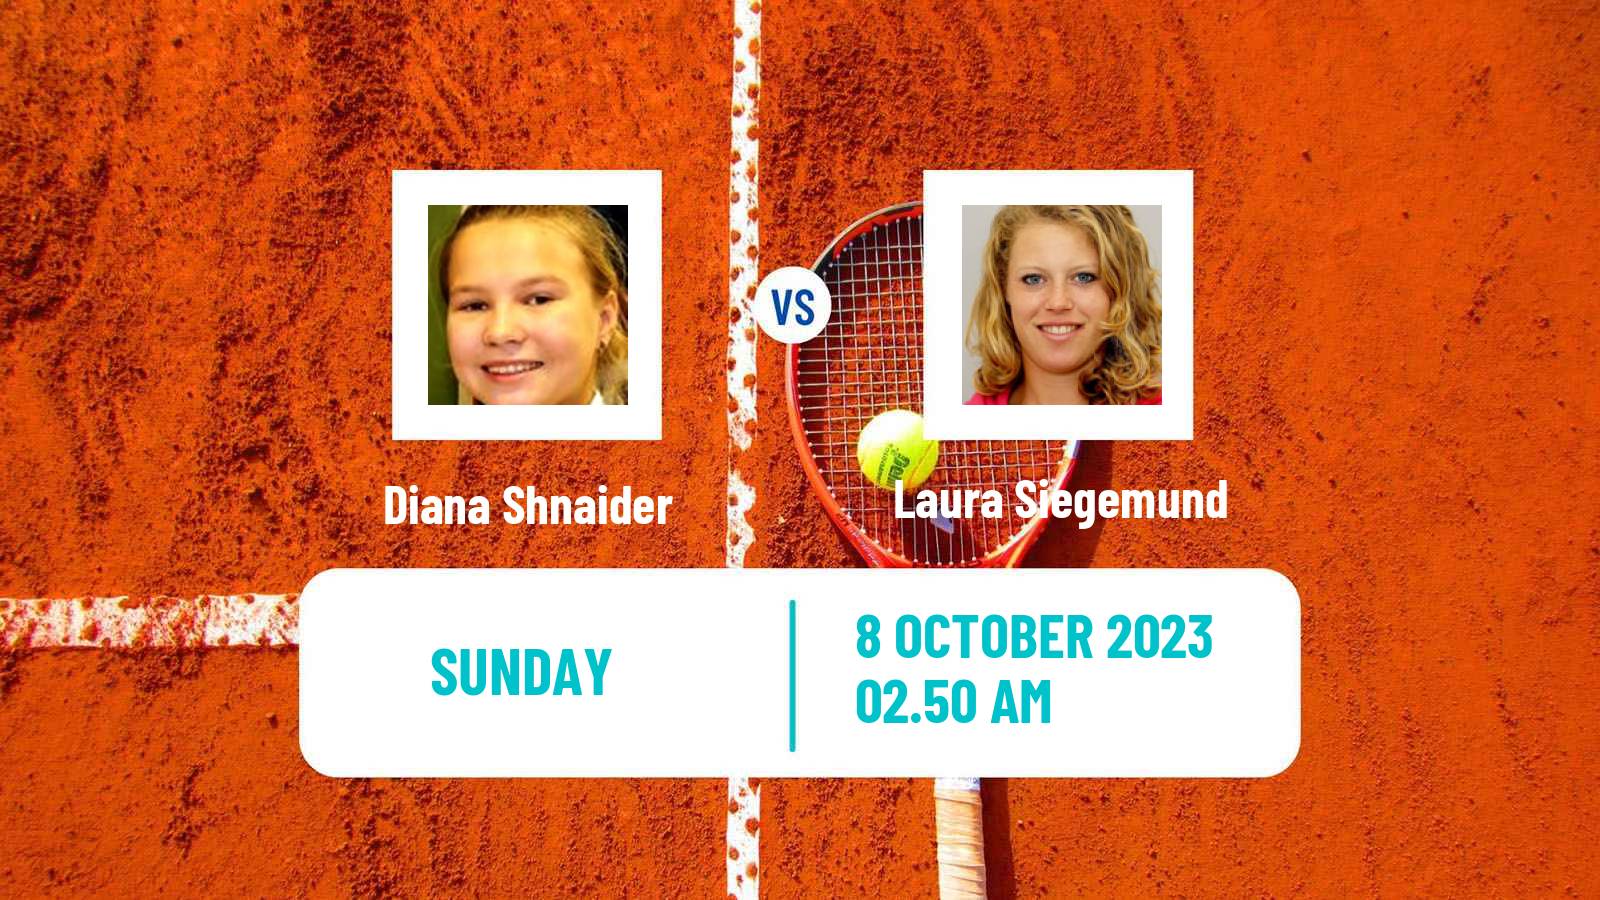 Tennis WTA Zhengzhou Diana Shnaider - Laura Siegemund